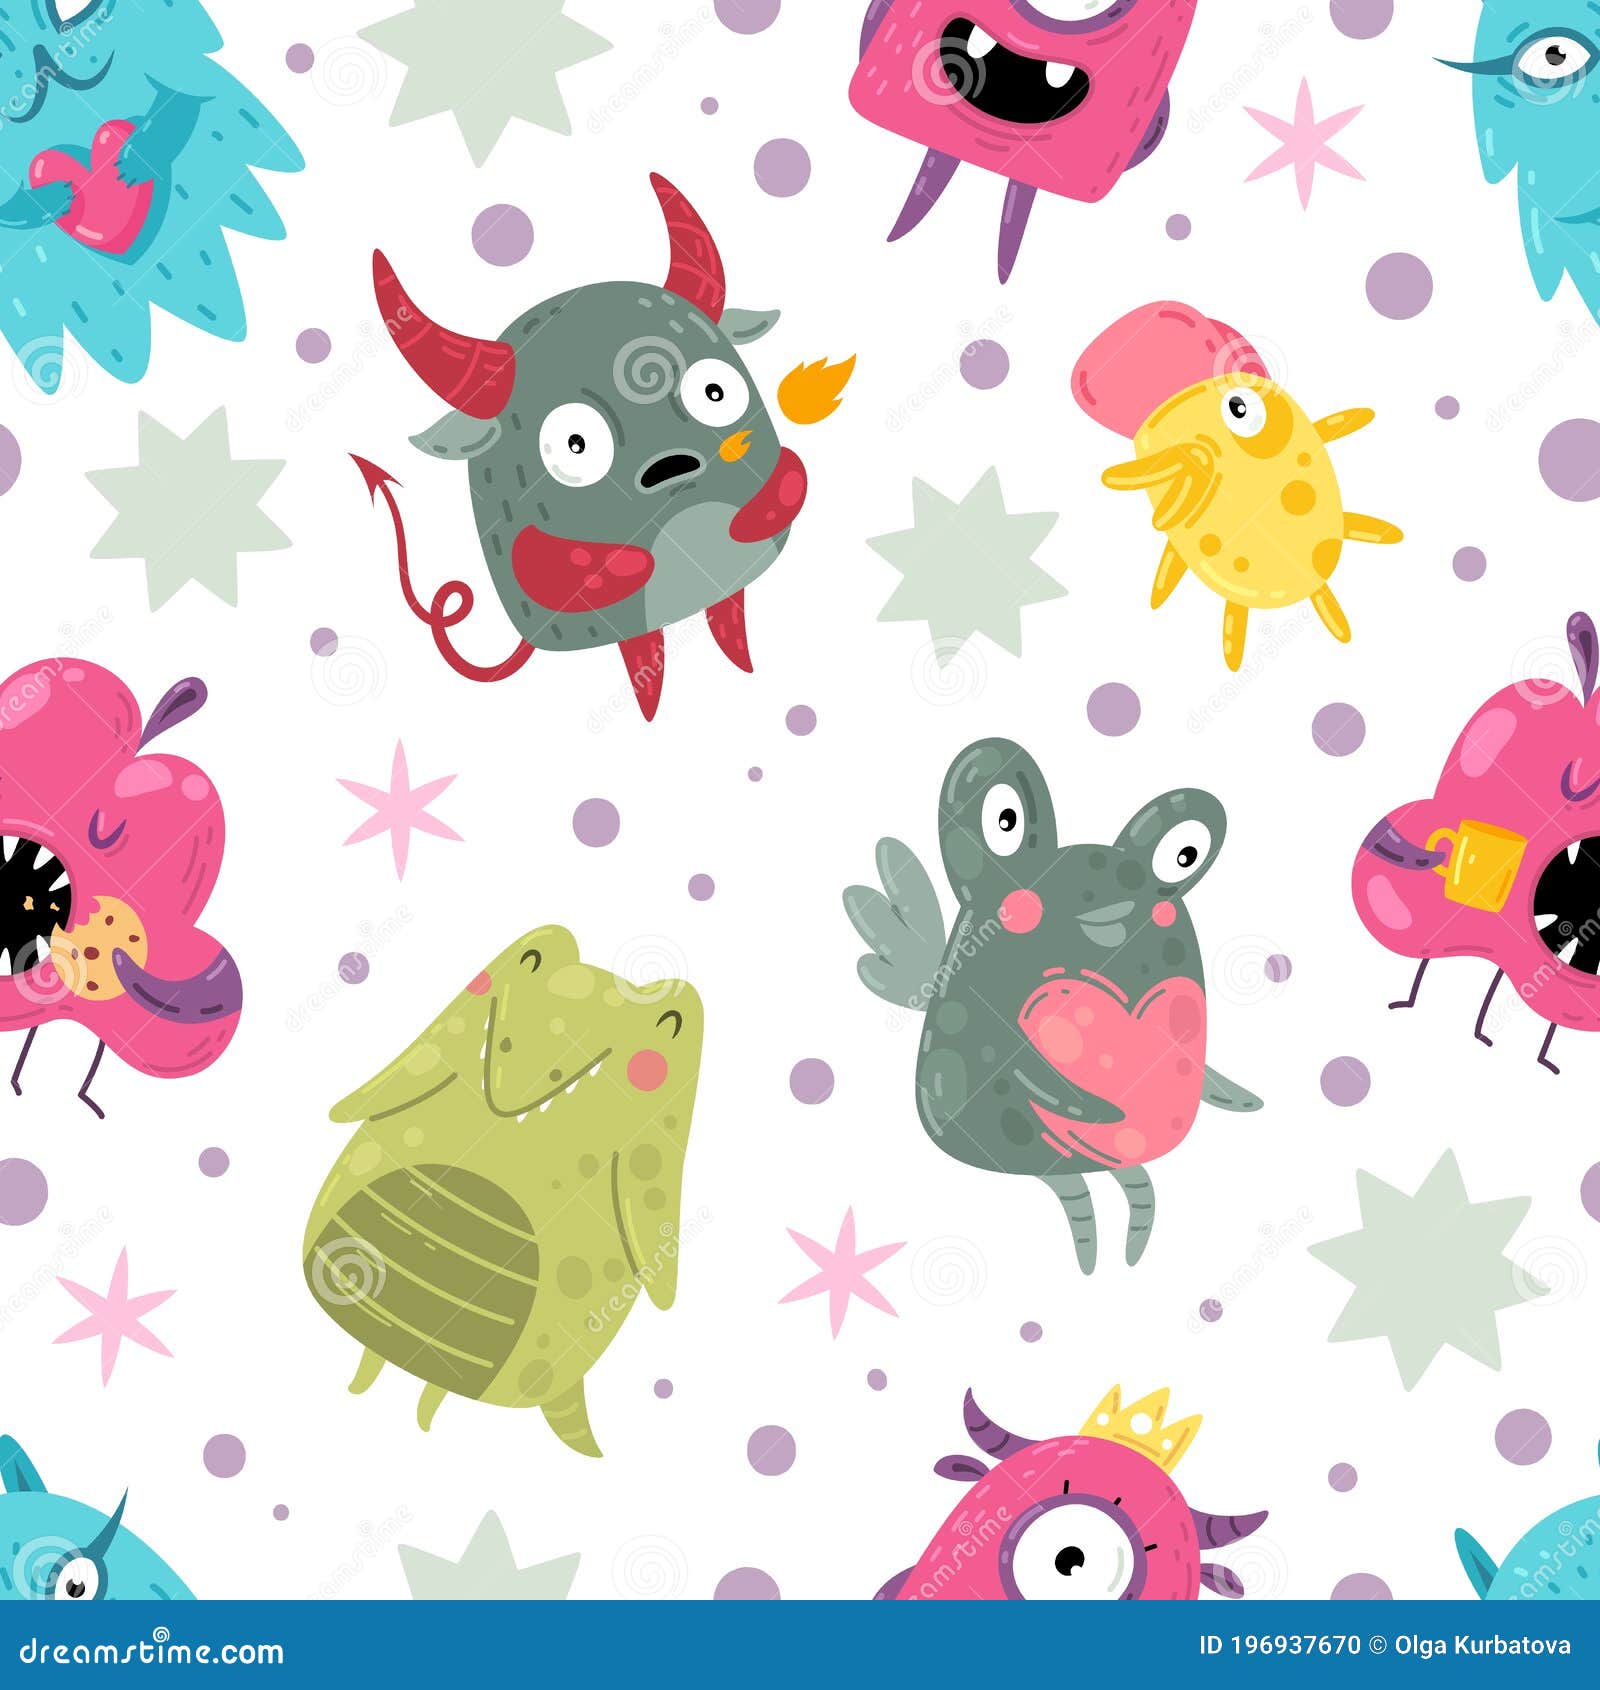 Digital Download Cute Monsters Seamless Design